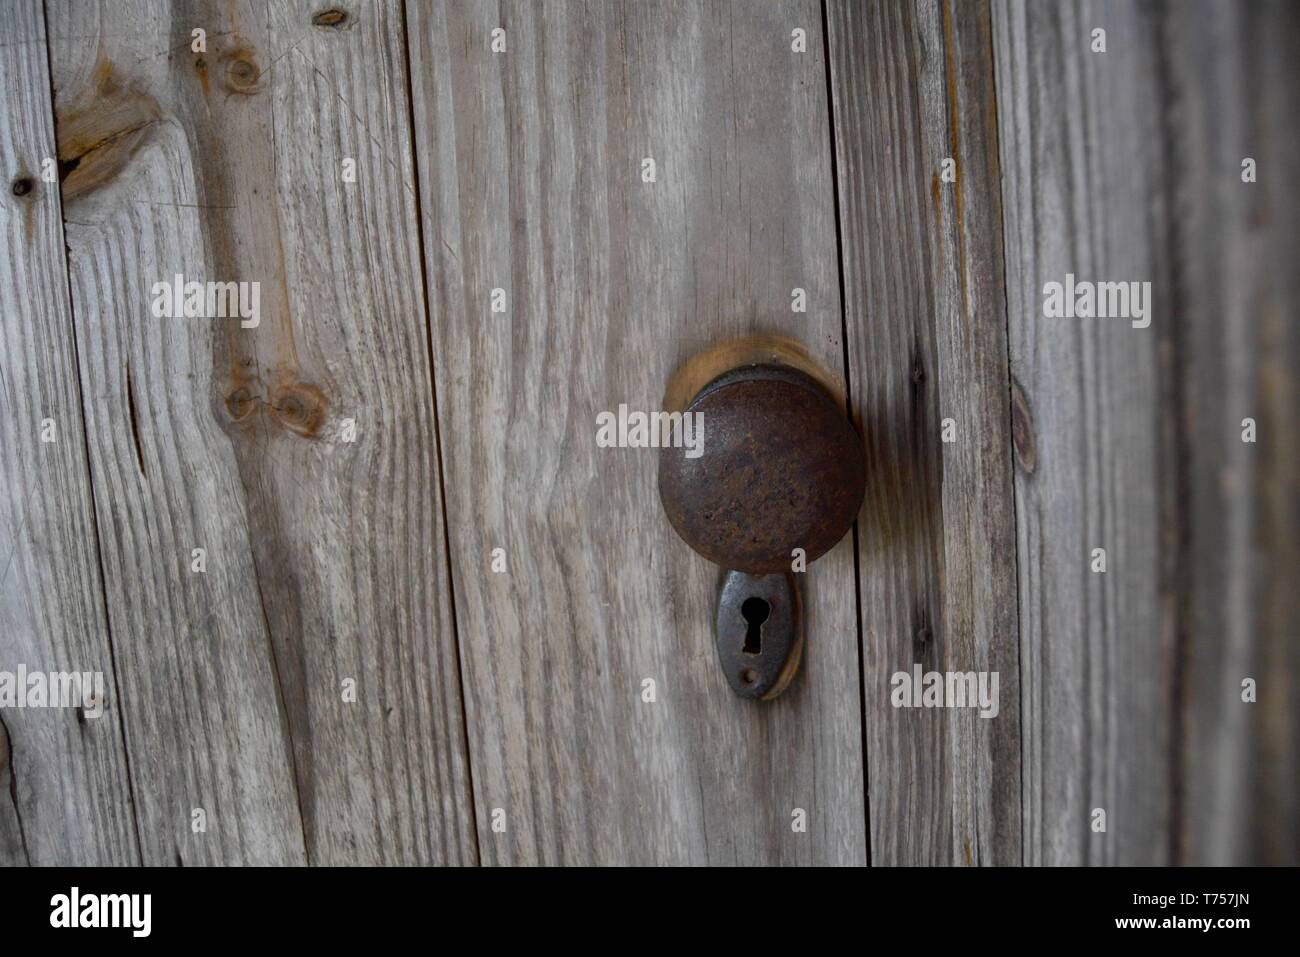 Old Rusty Door Knob with Key Hole Stock Photo